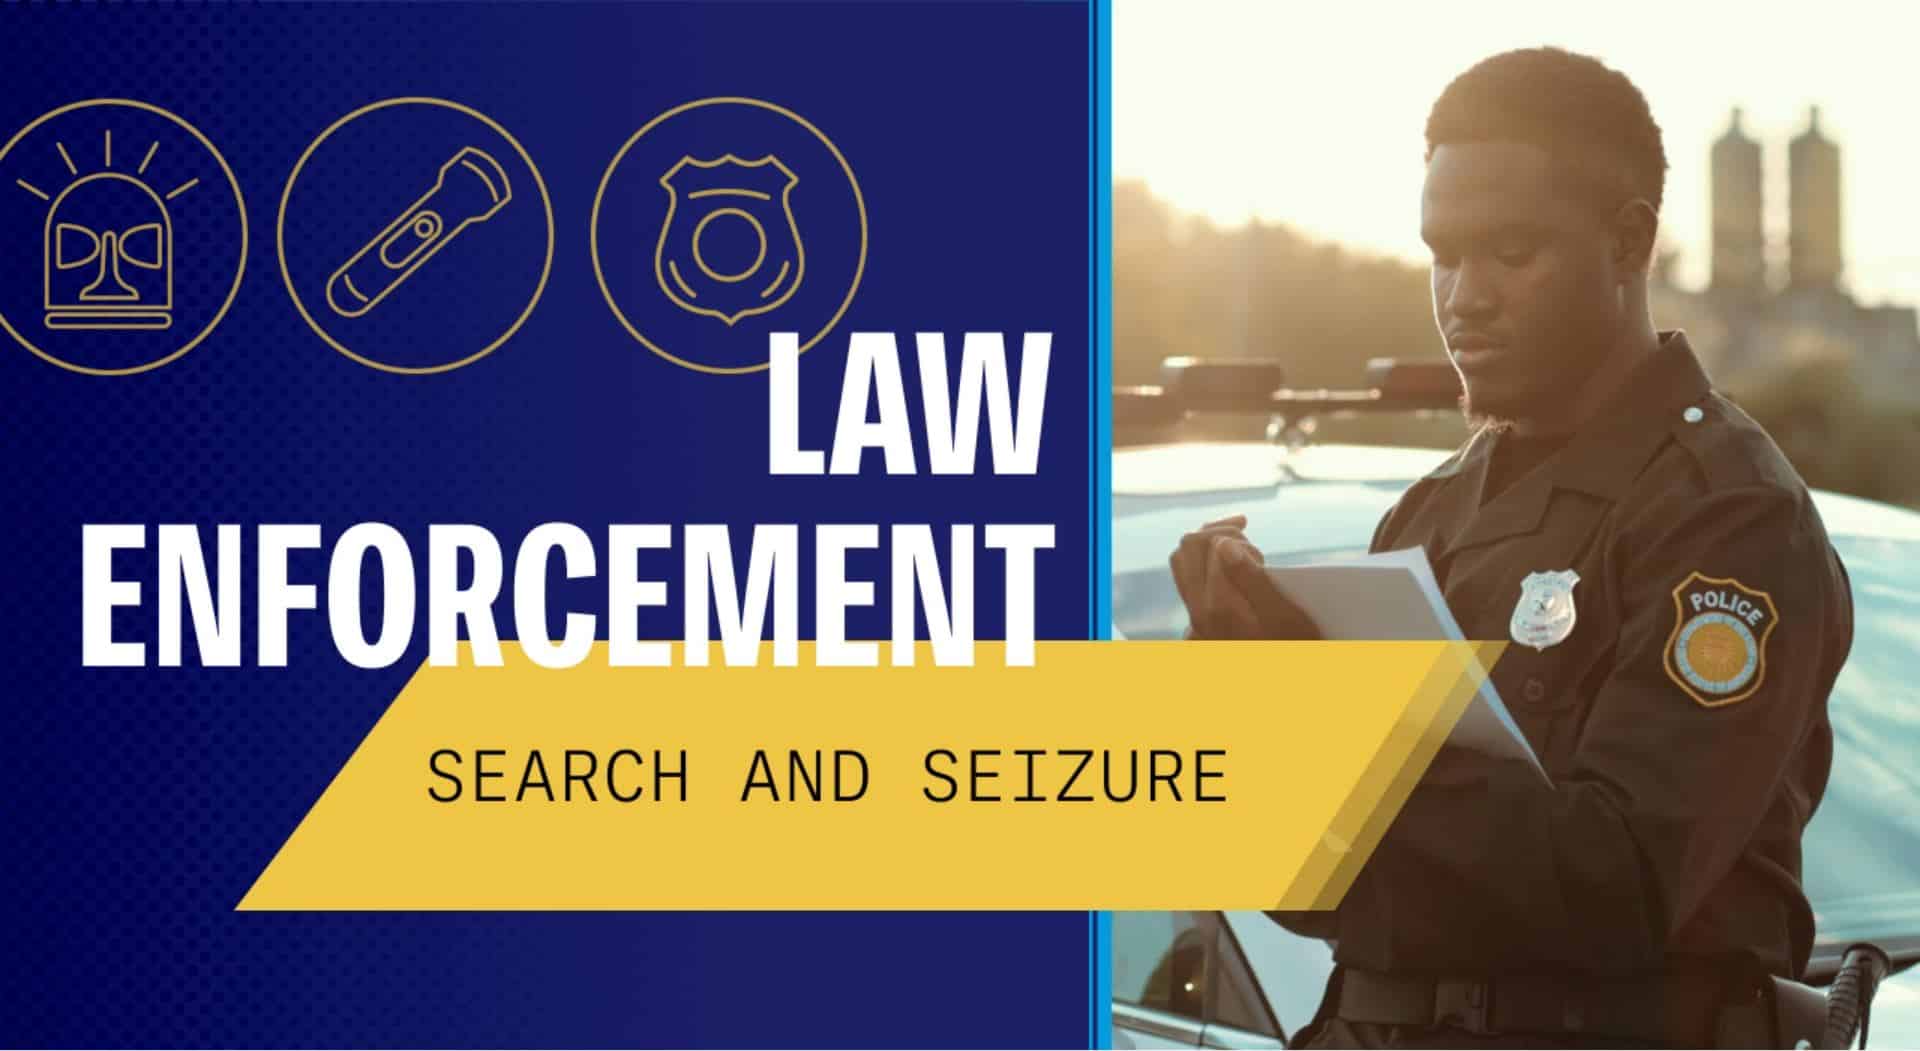 Law Enforcement Search and Seizure course